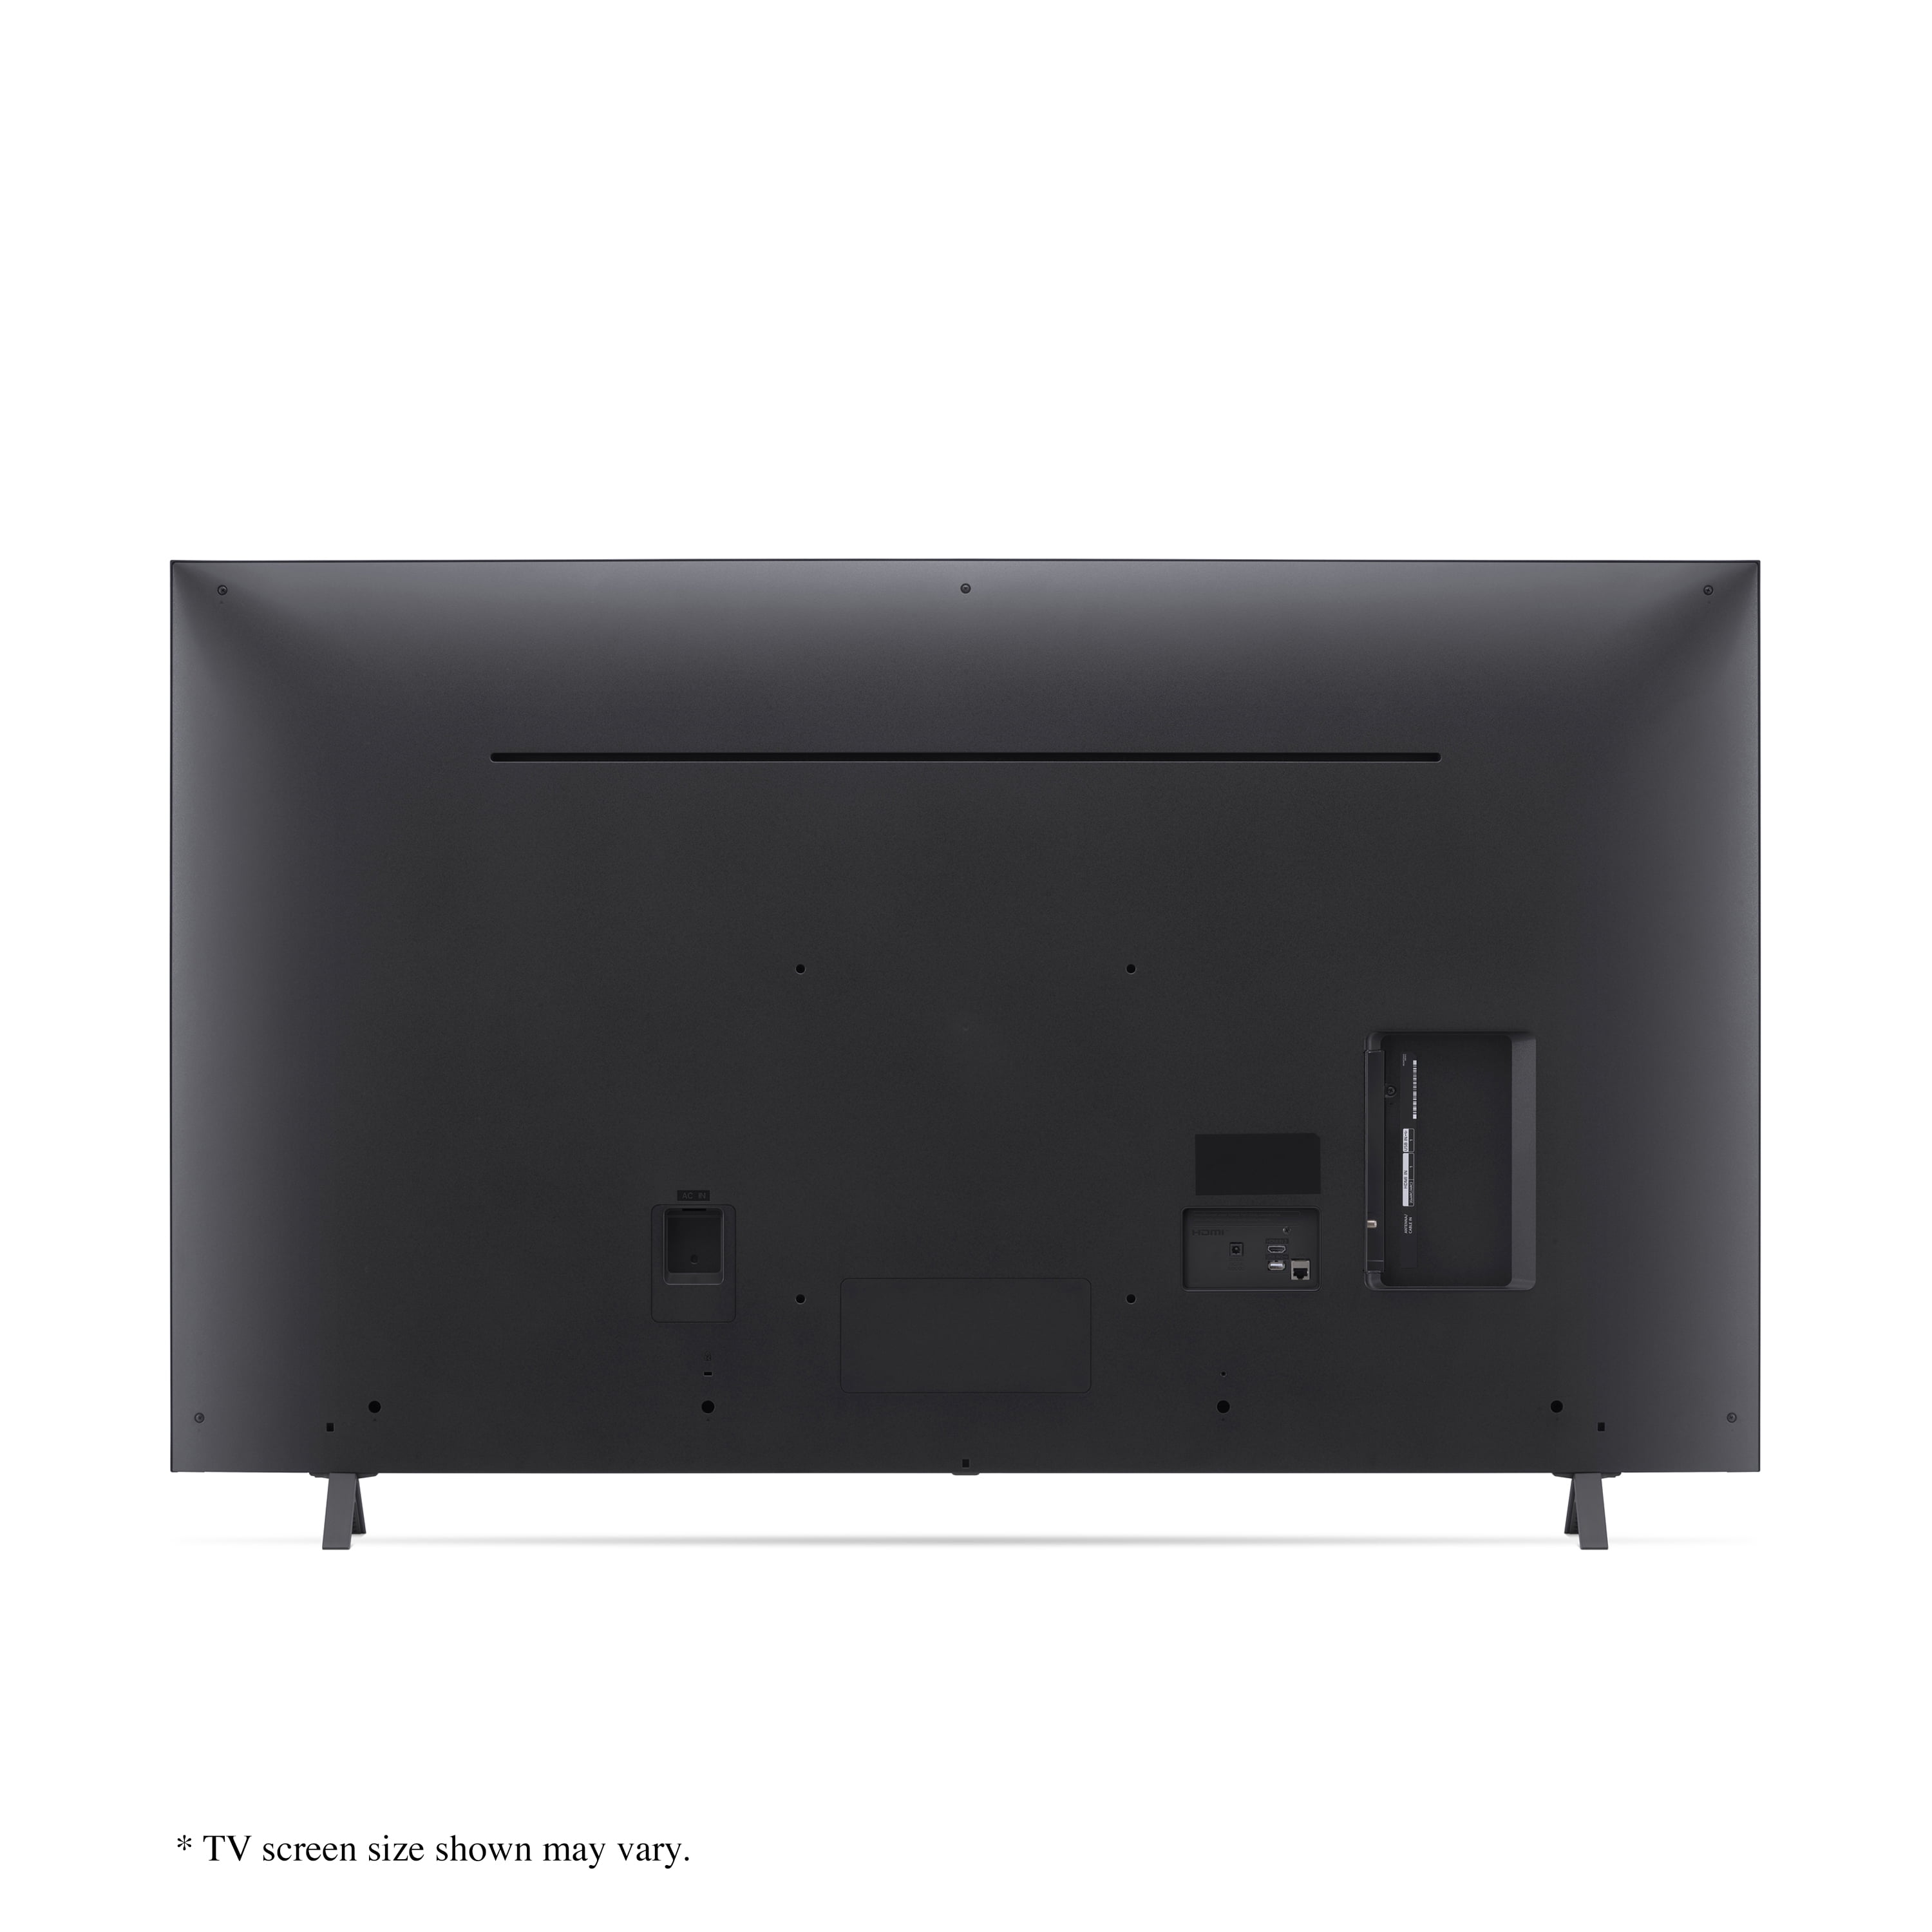 Televisor LG 55 pulgadas UHD ThinQ AI 4K Ultra HD Smart TV LG